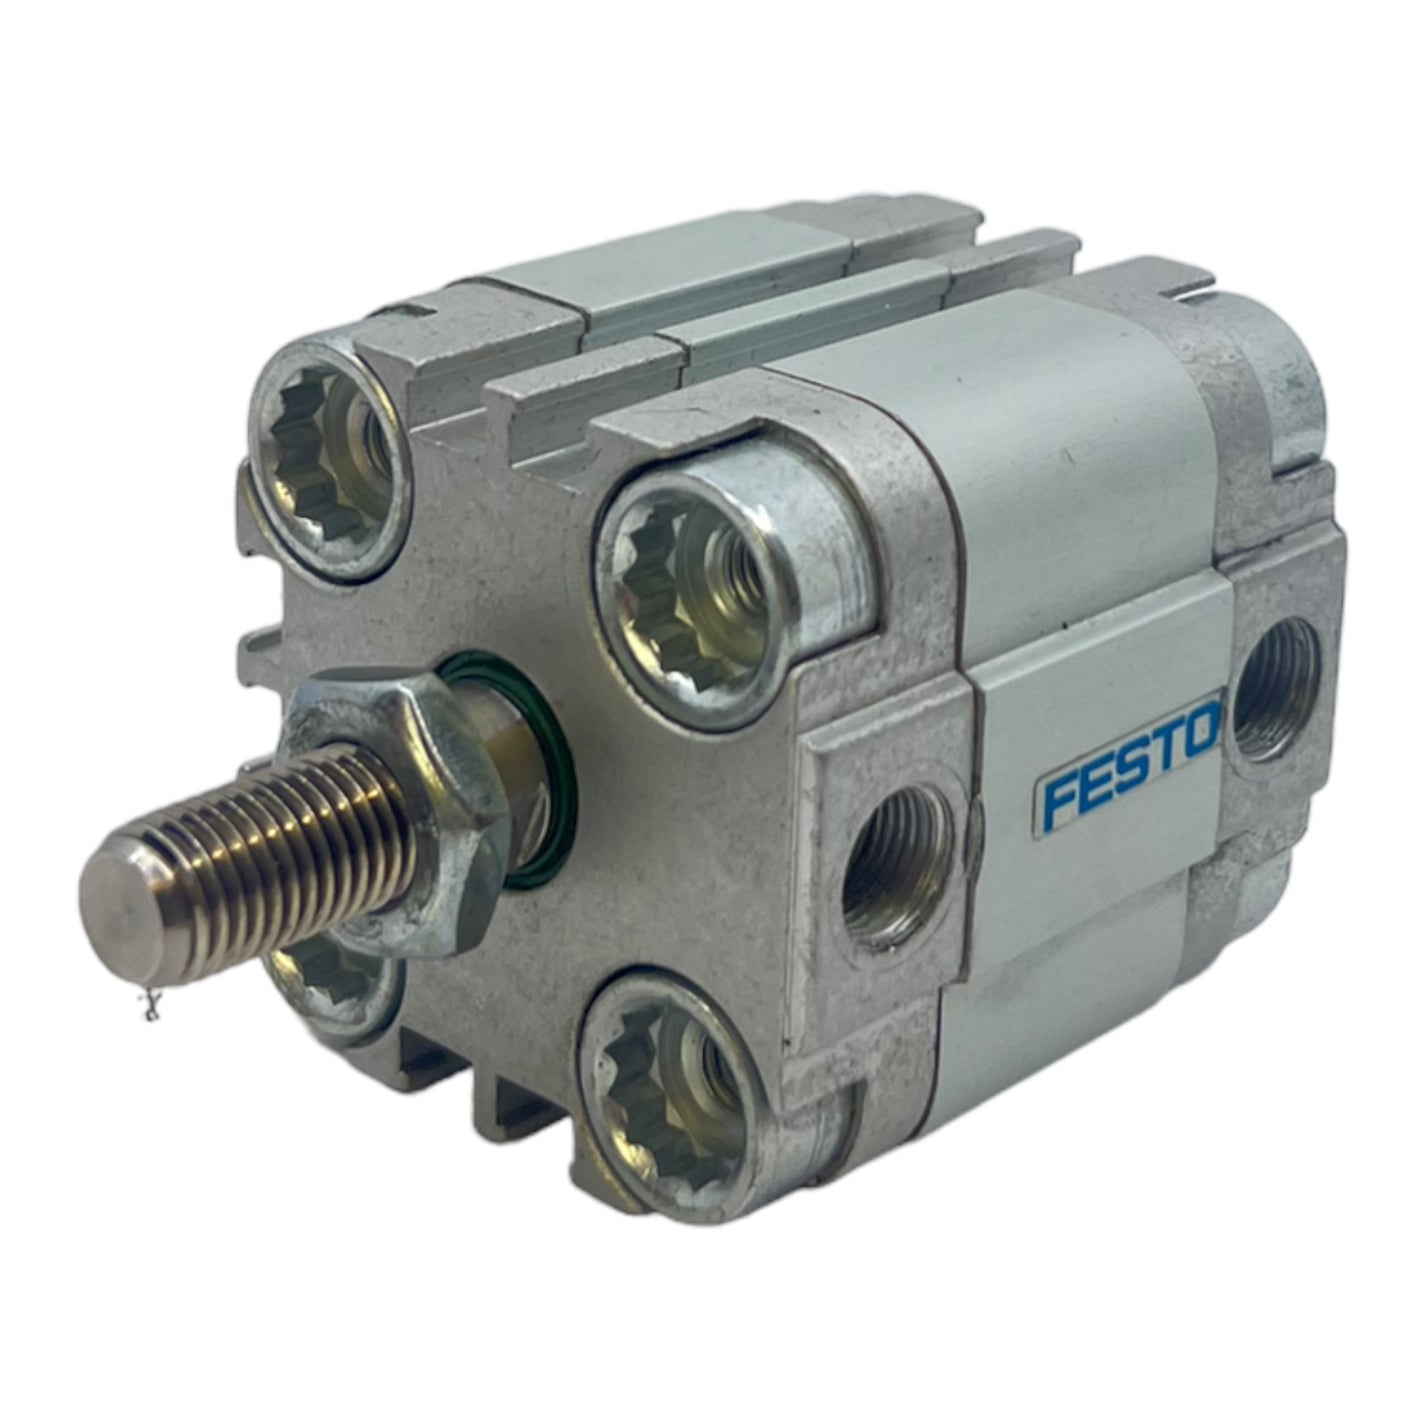 Festo ADVU-32-10-APA compact cylinder 156617 pneumatic cylinder G1/8 